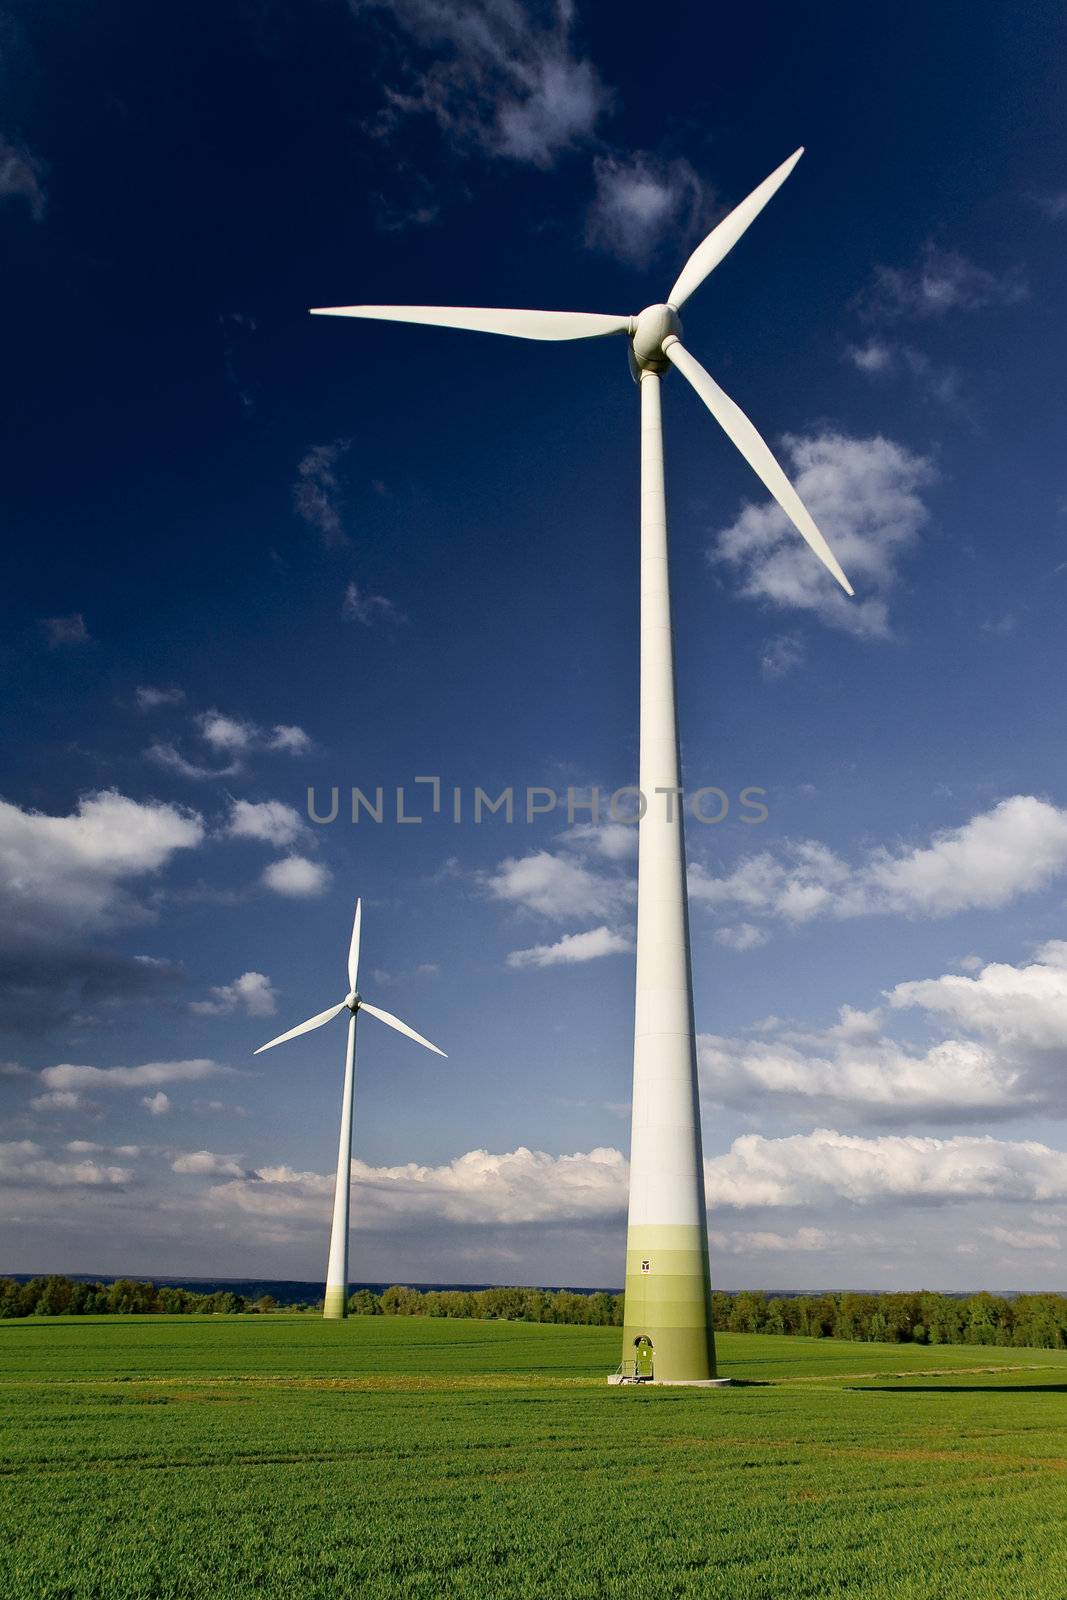 Windmills against a blue sky by Gbuglok